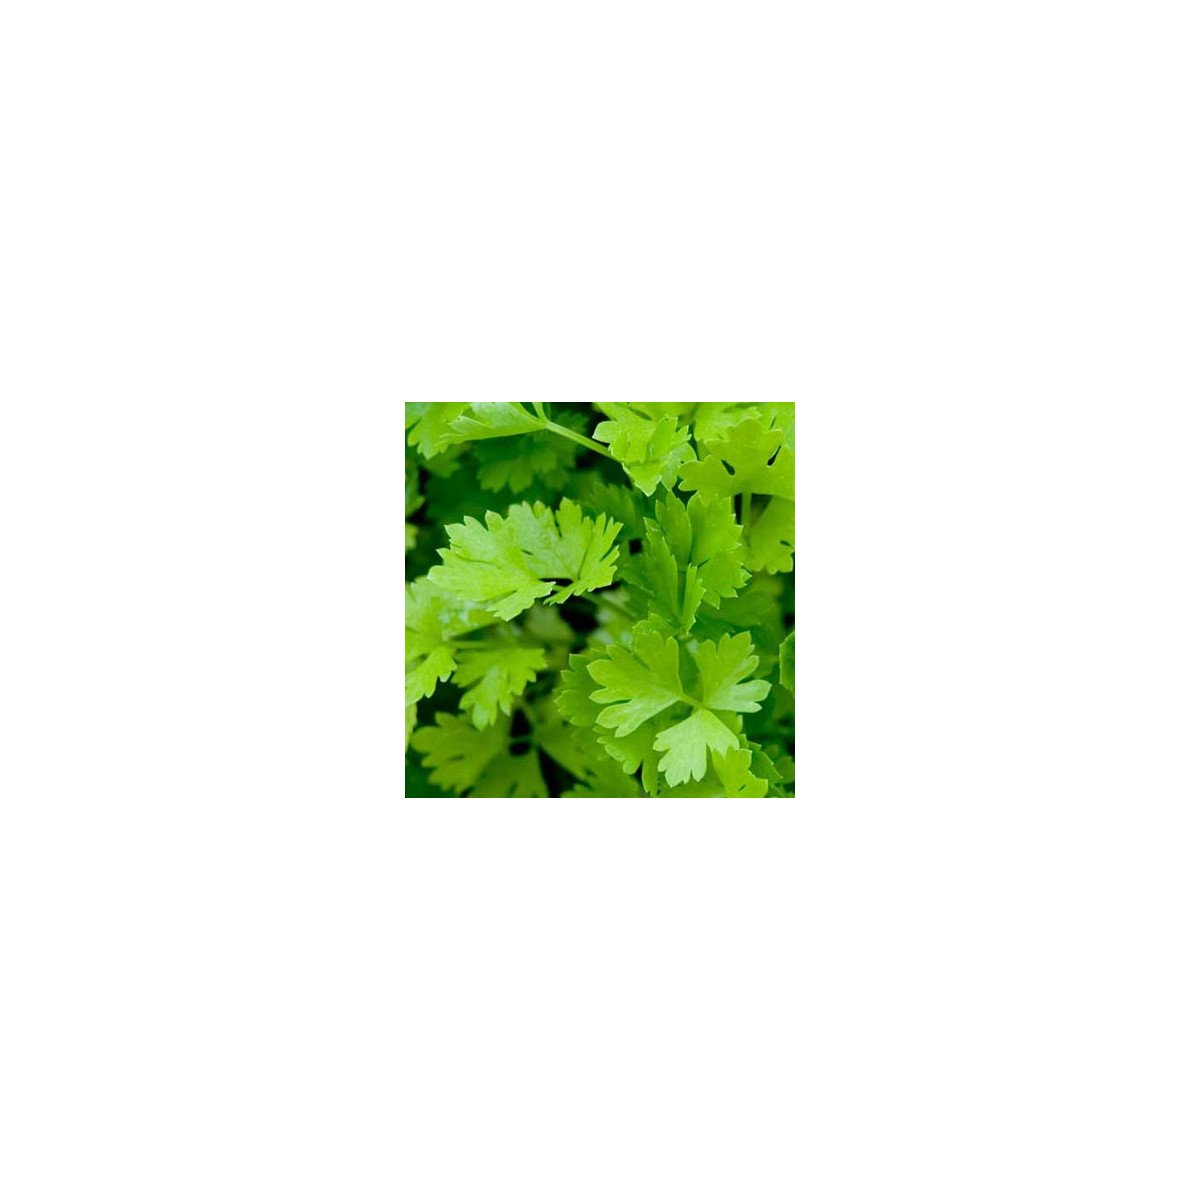 Celer řapíkatý - Apium graveolens - semena celeru - 1 gr